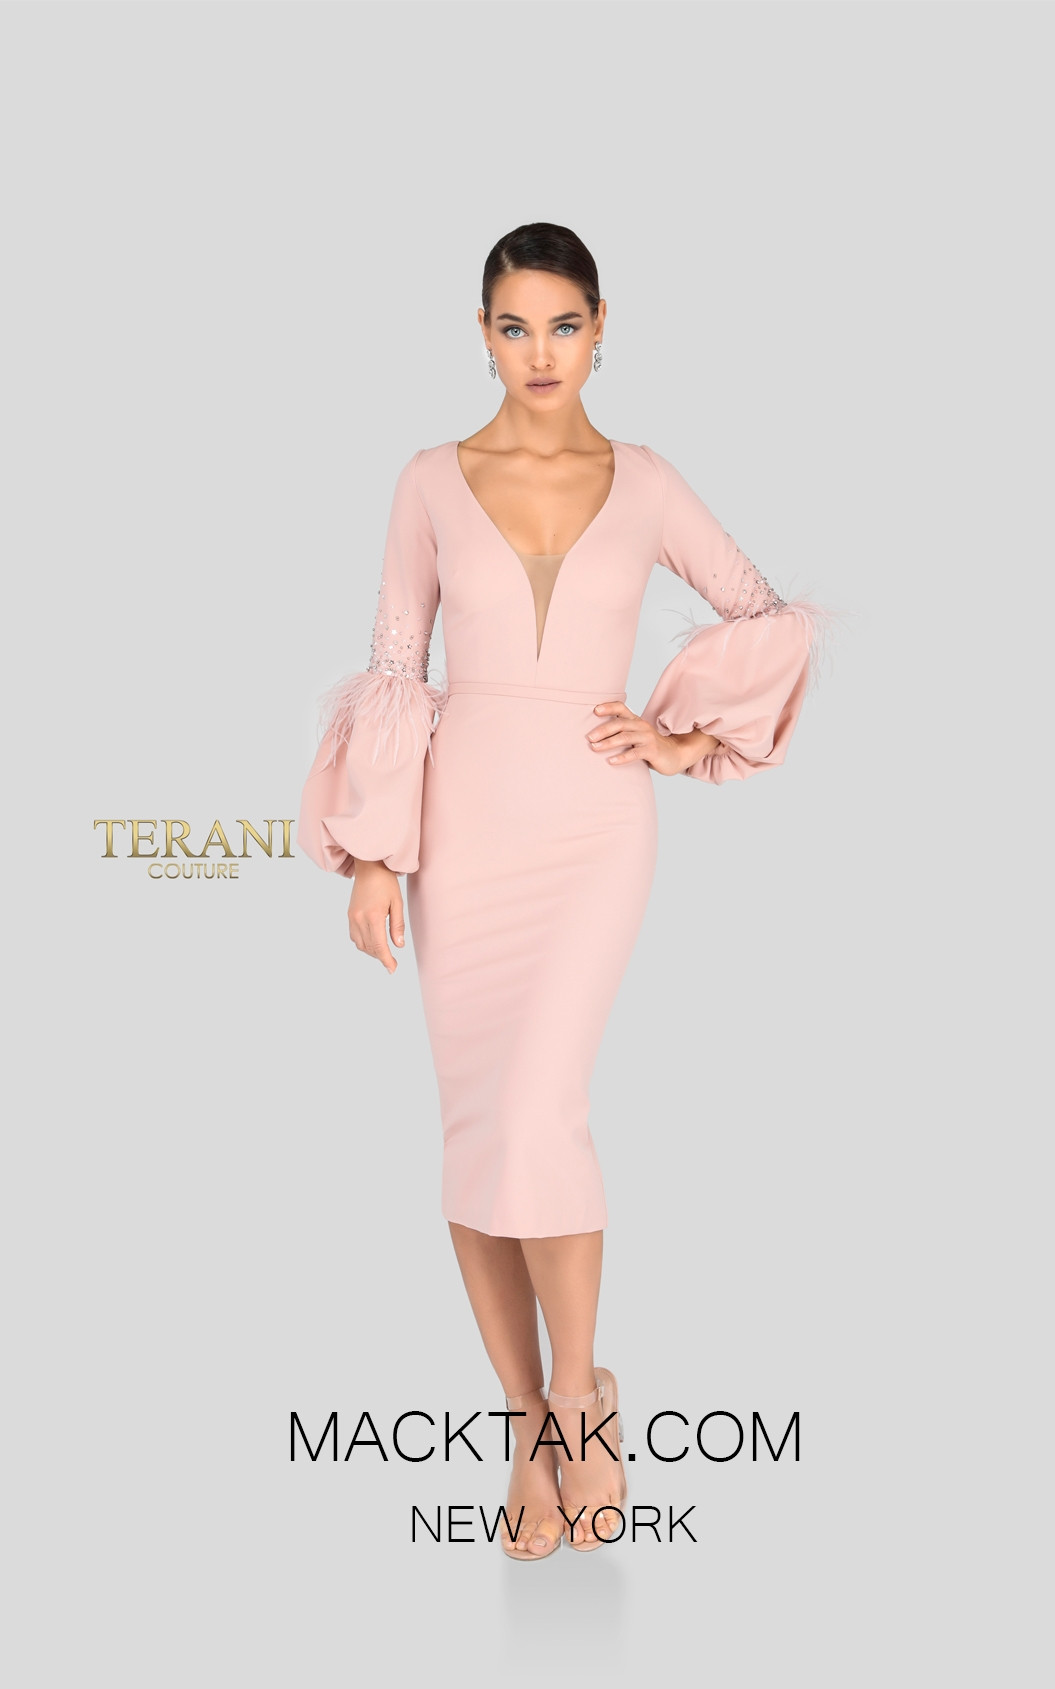 terani blush dress